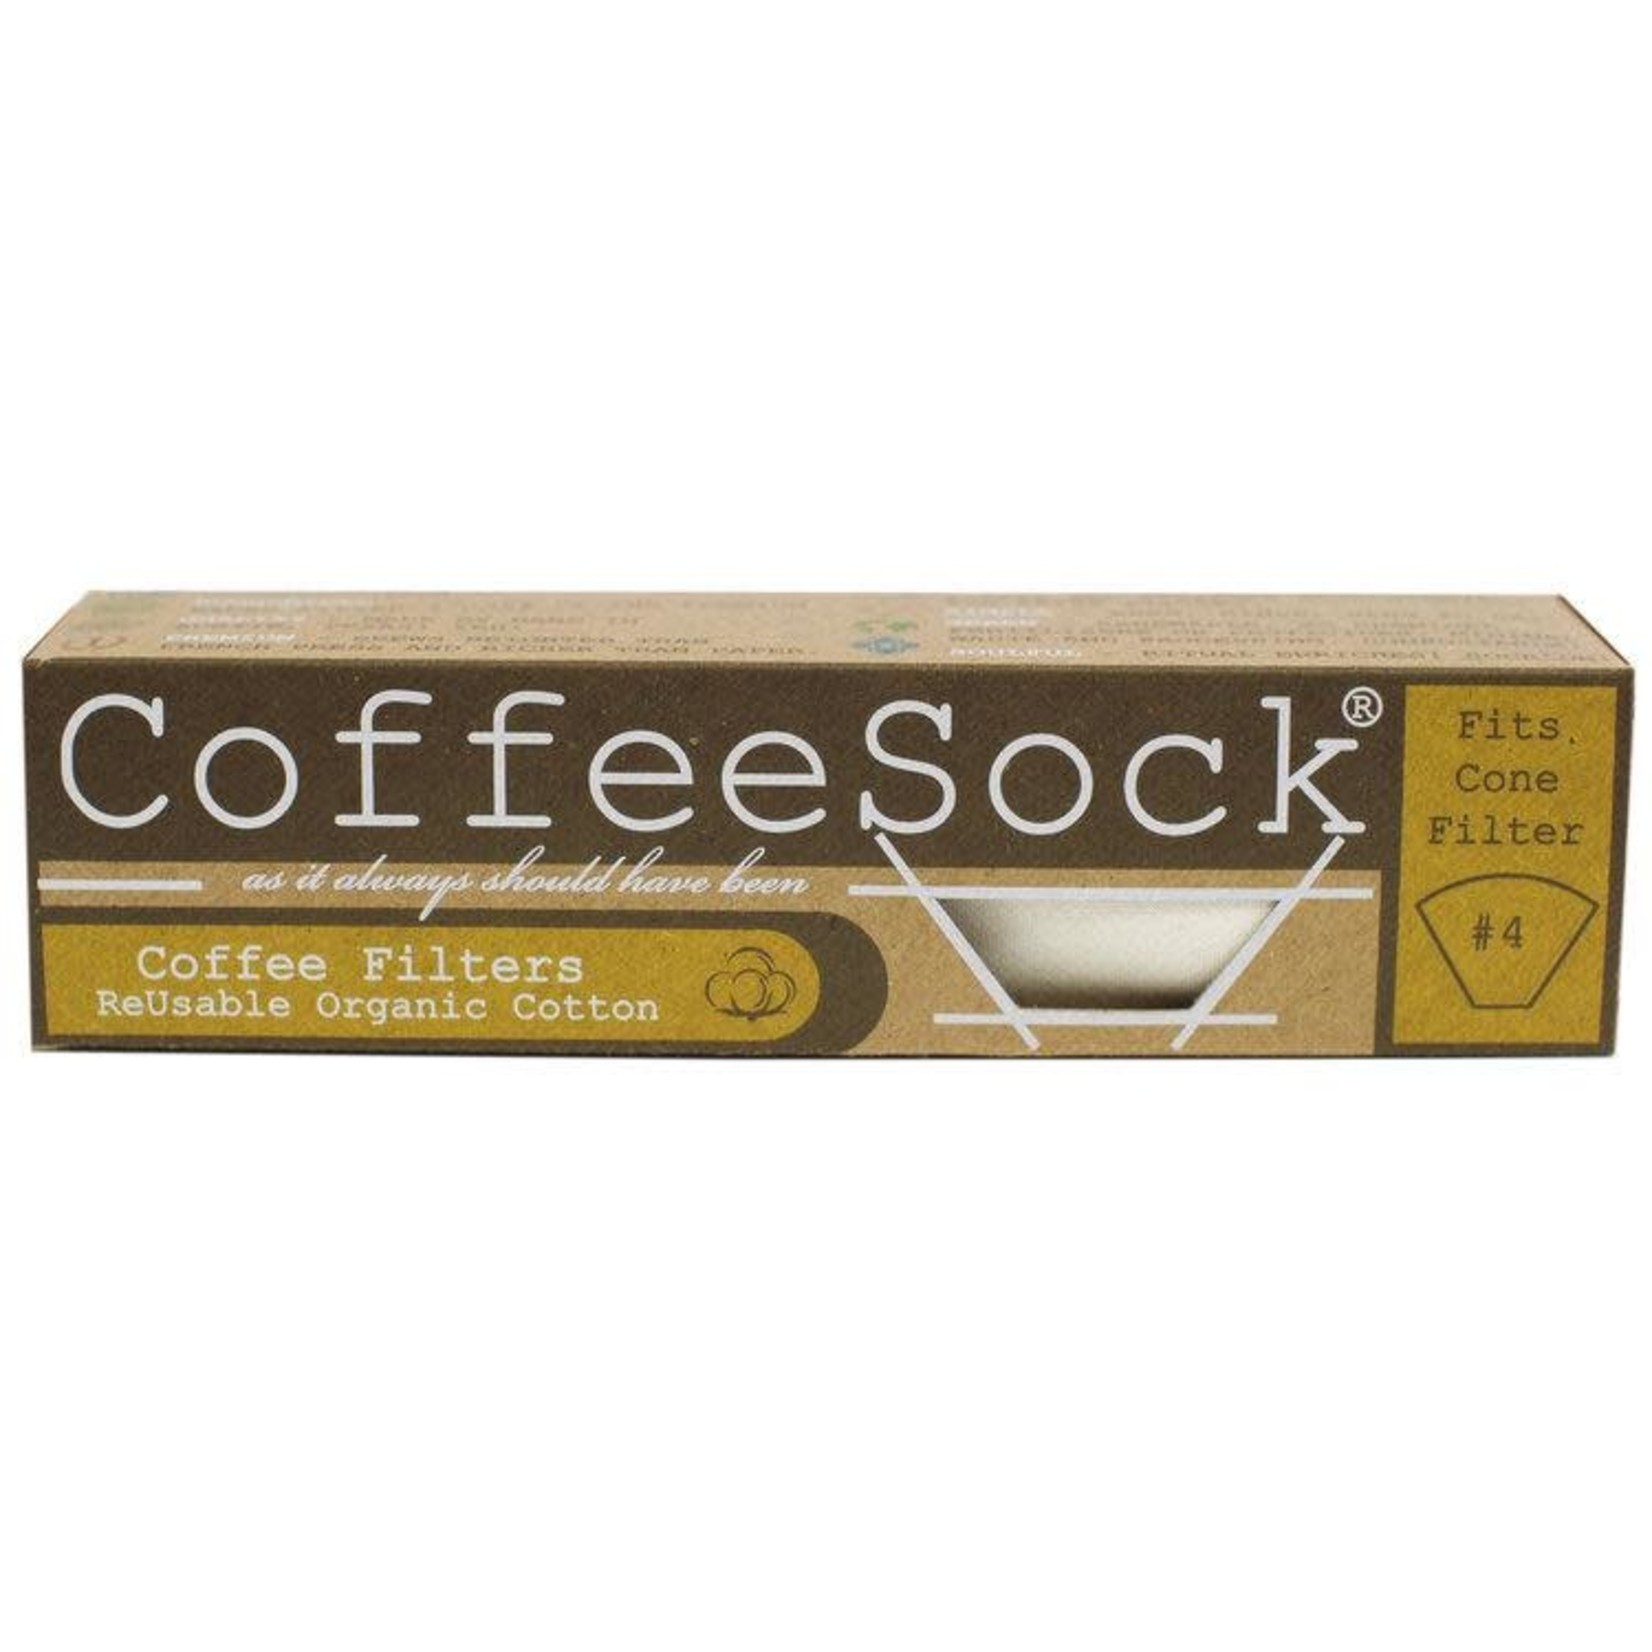 CoffeeSock CoffeeSock #4 Filter